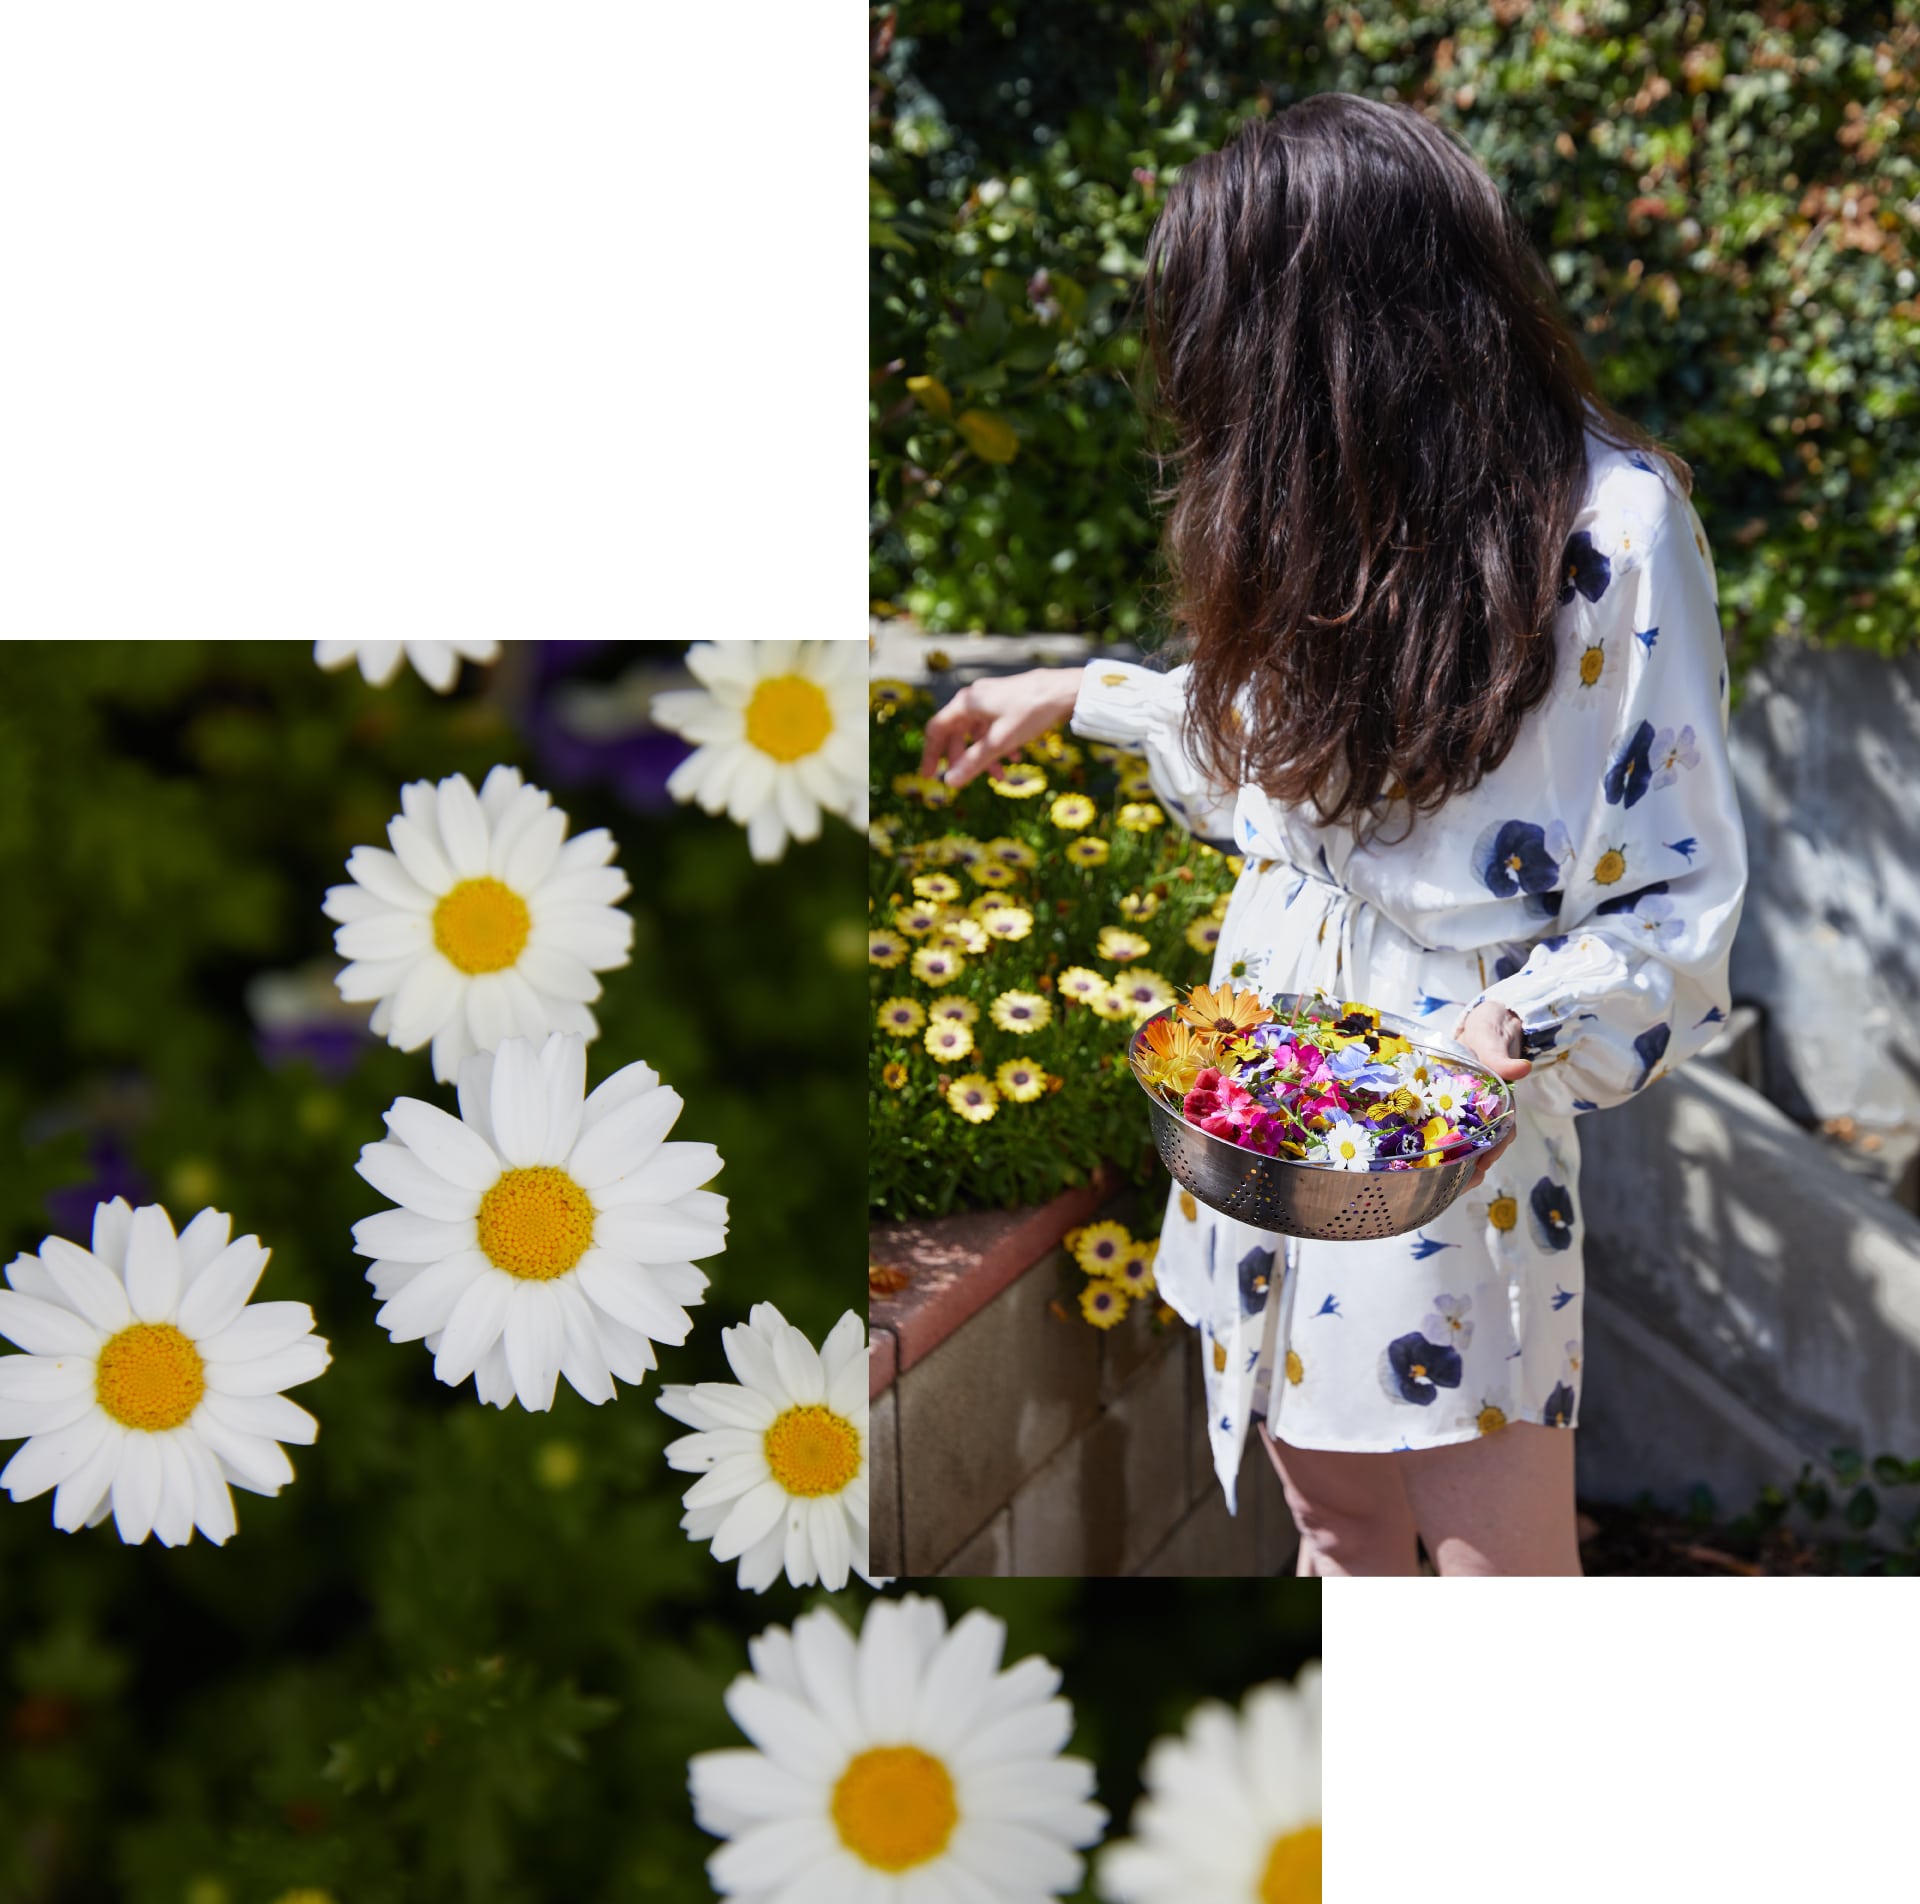 Loria in her garden with flowers and Lunya sleepwear